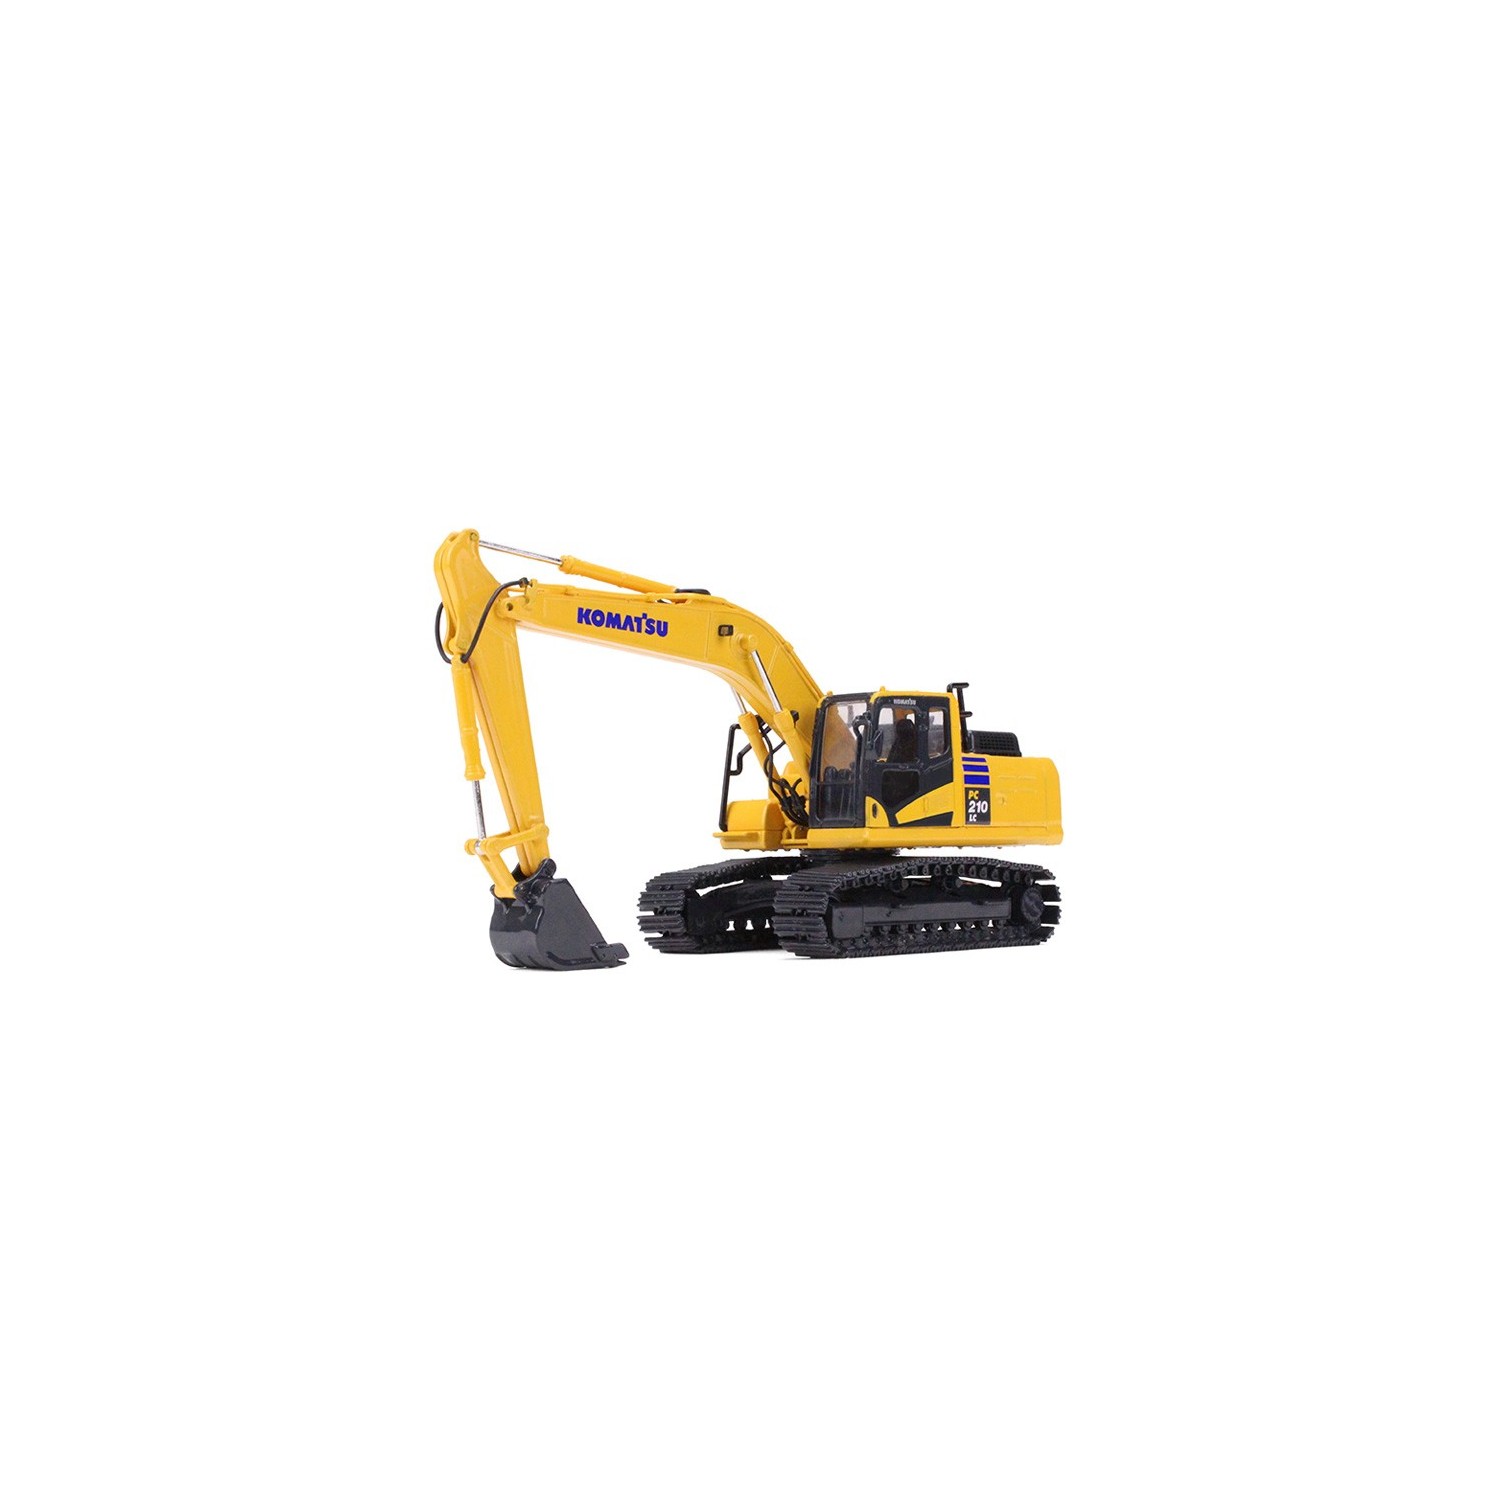 1:50 Scale Komatsu PC210LC-11 Hydraulic Excavator With Hammer  Diecast Toy Model 